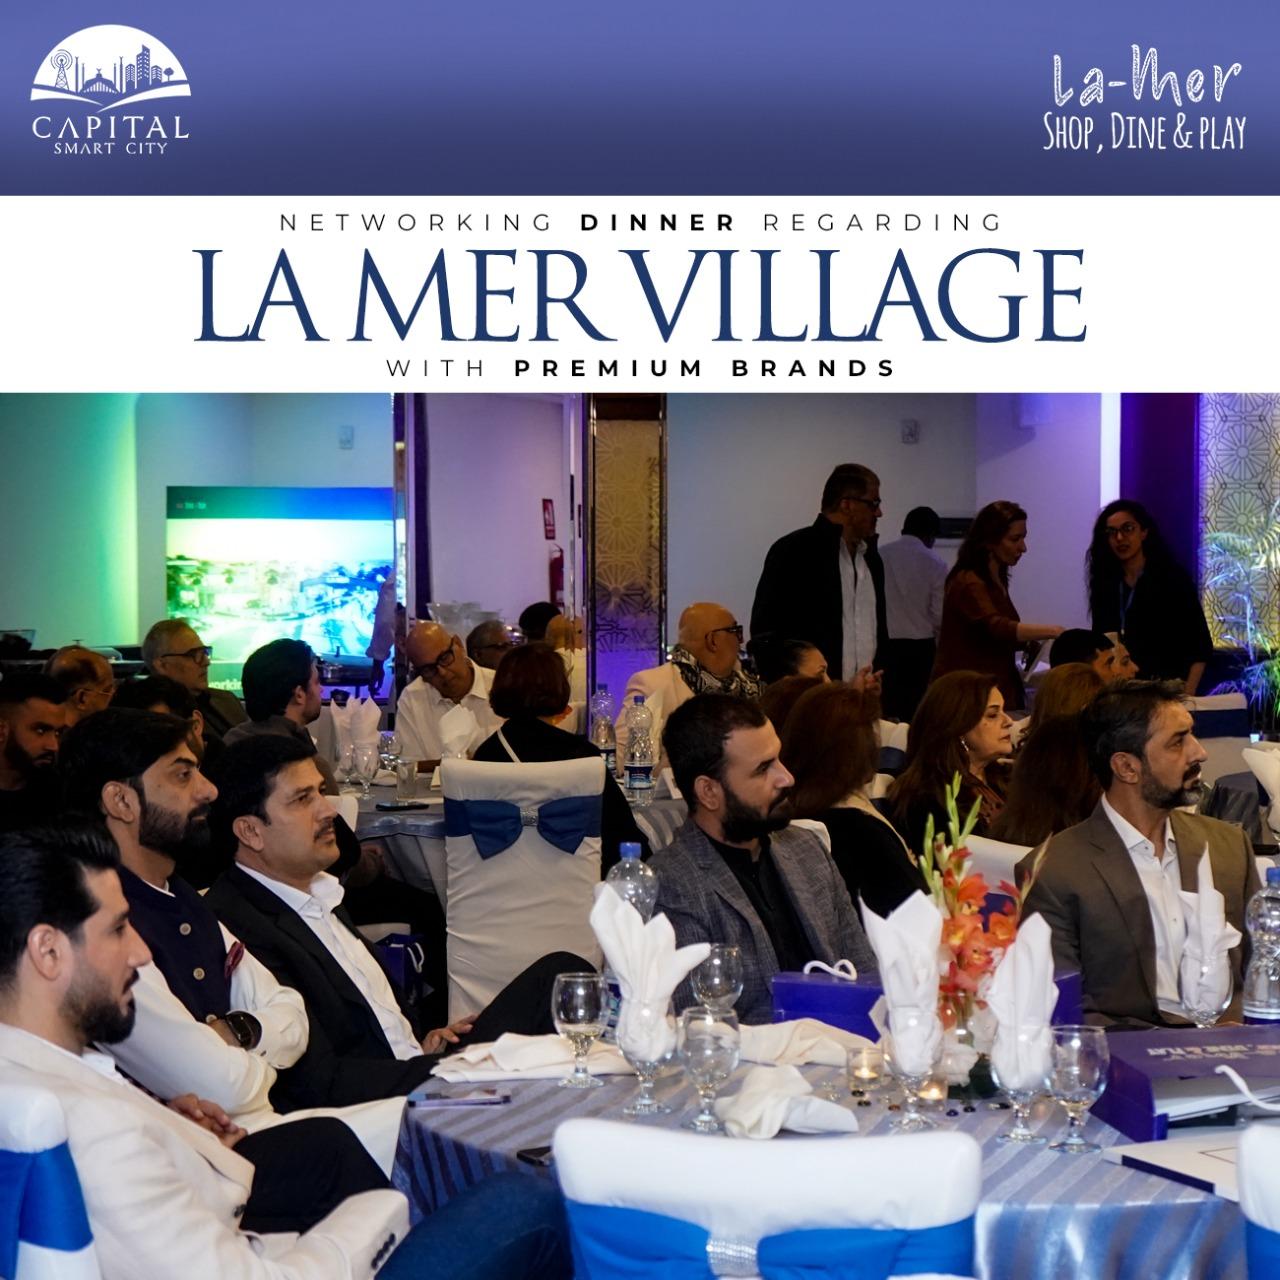 Networking dinner regarding La Mer village with premium brands